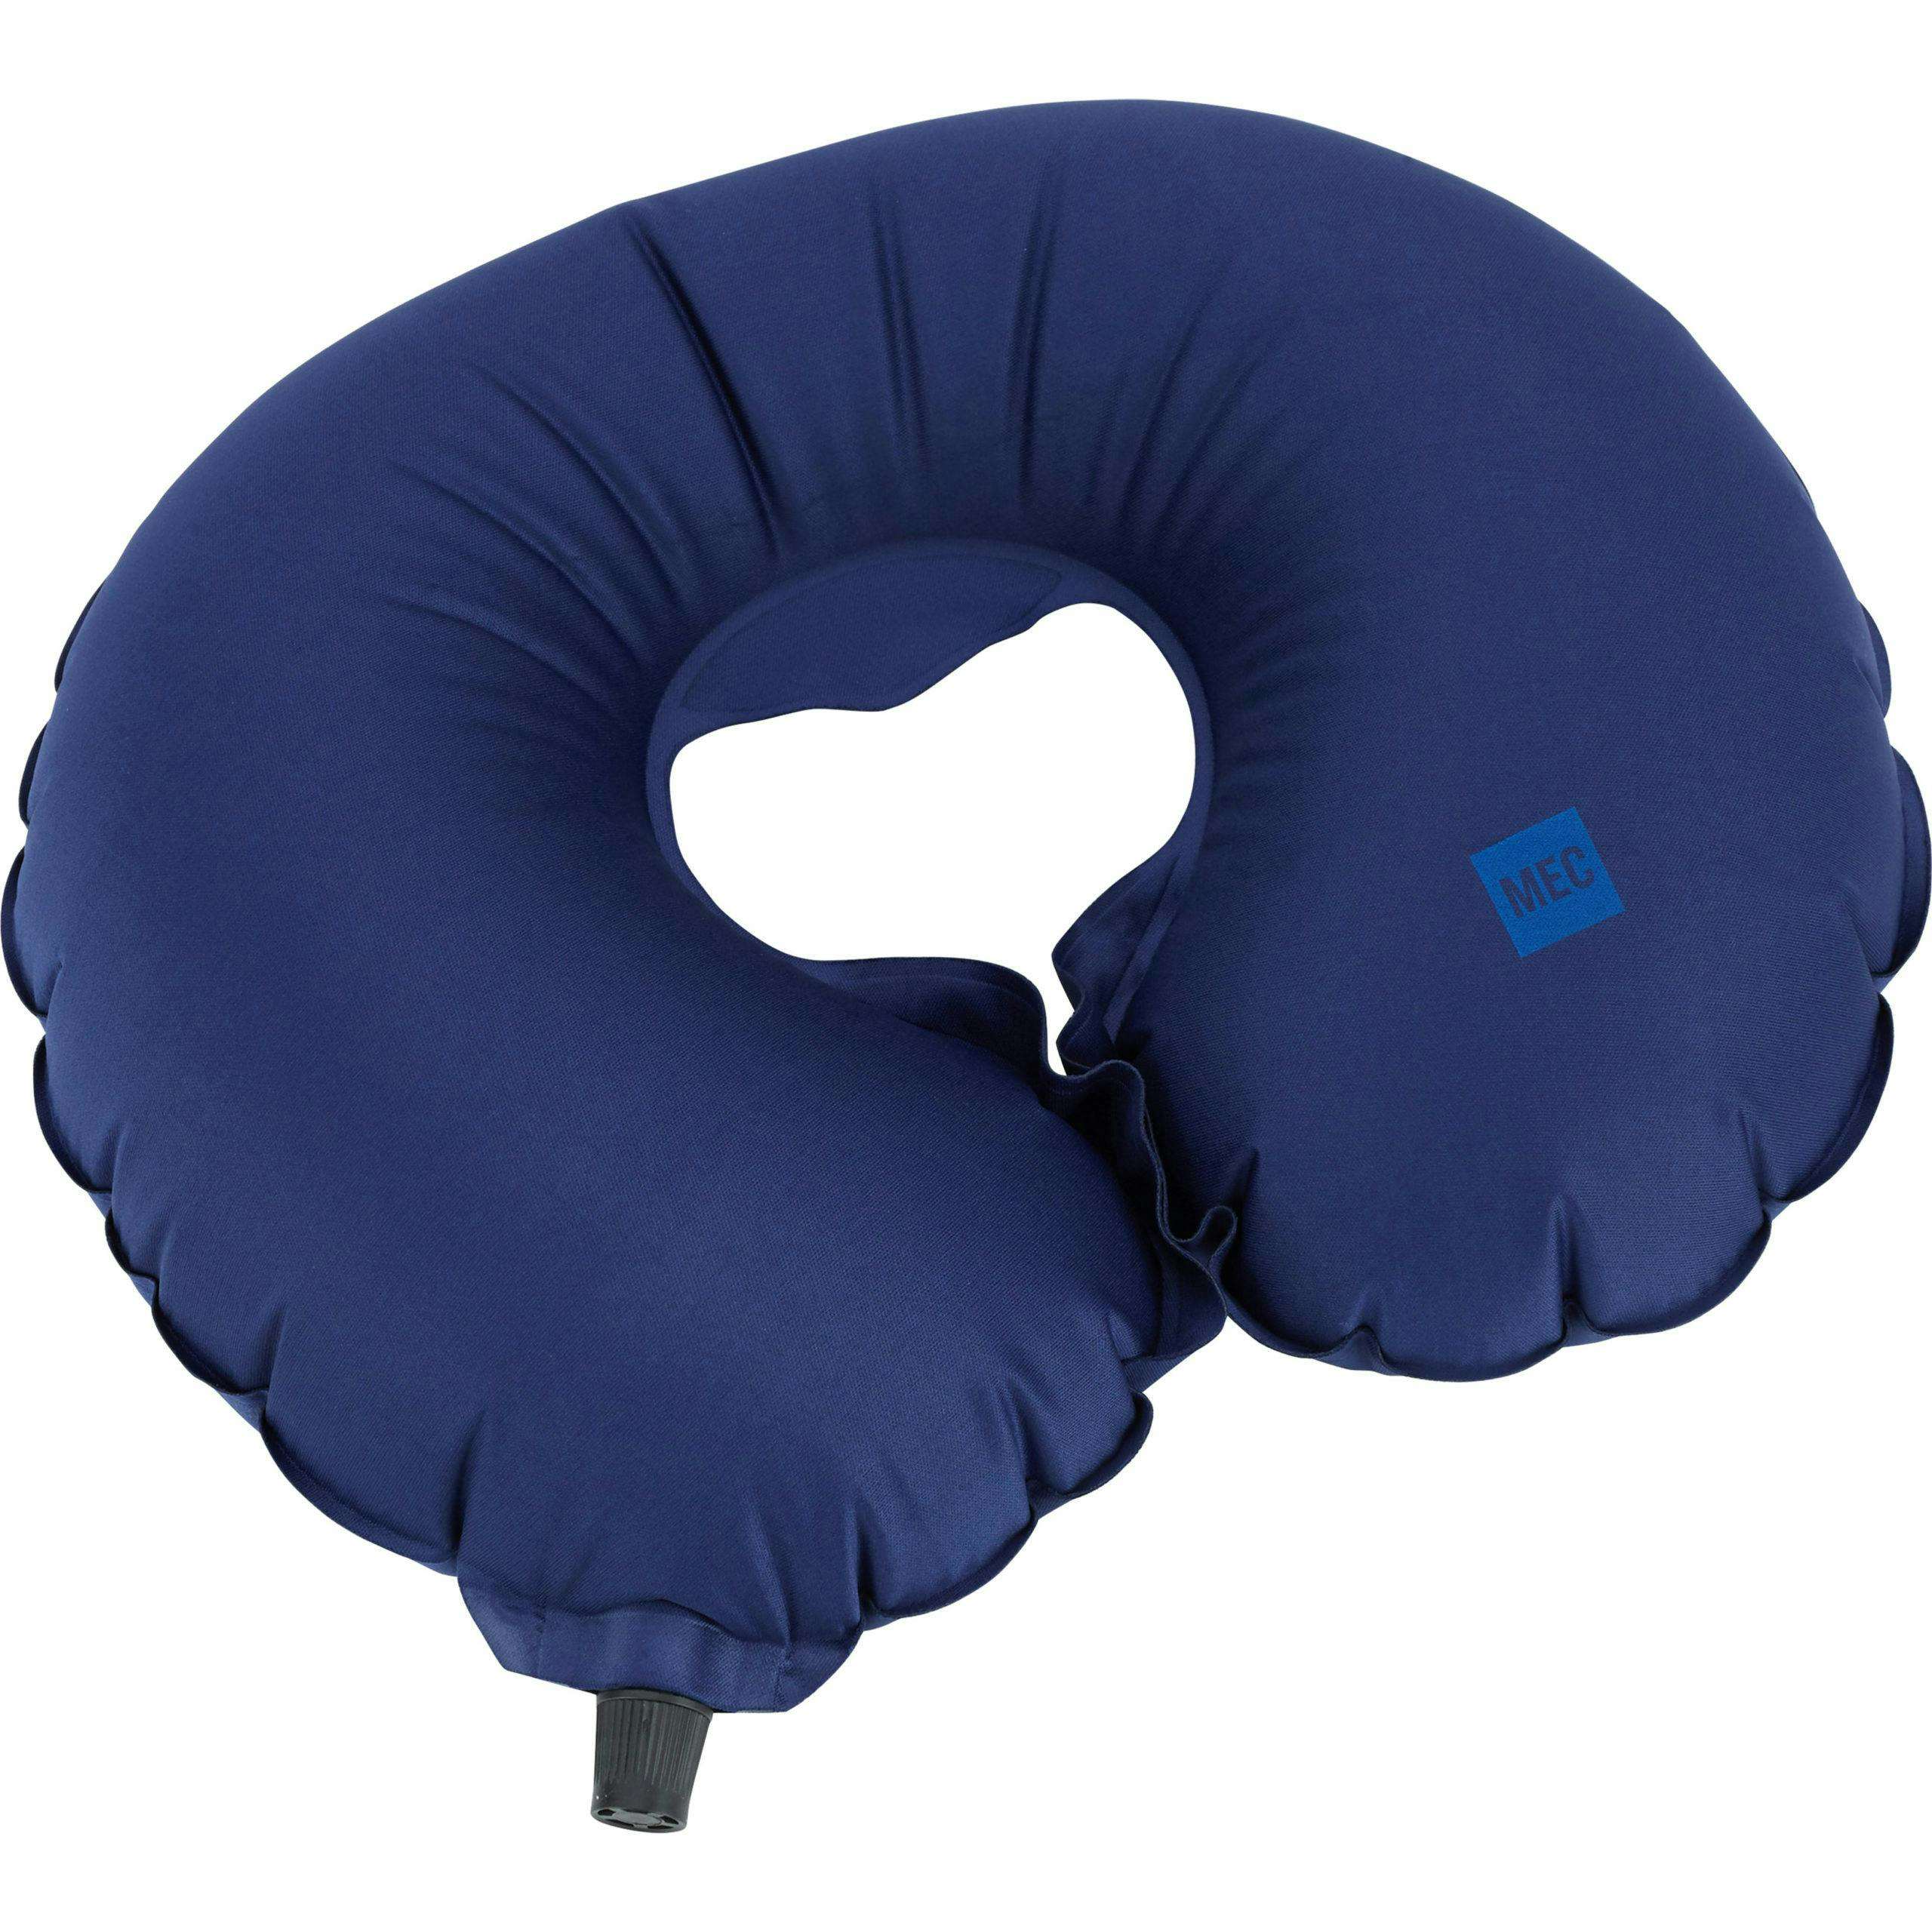 MEC inflatable travel pillow